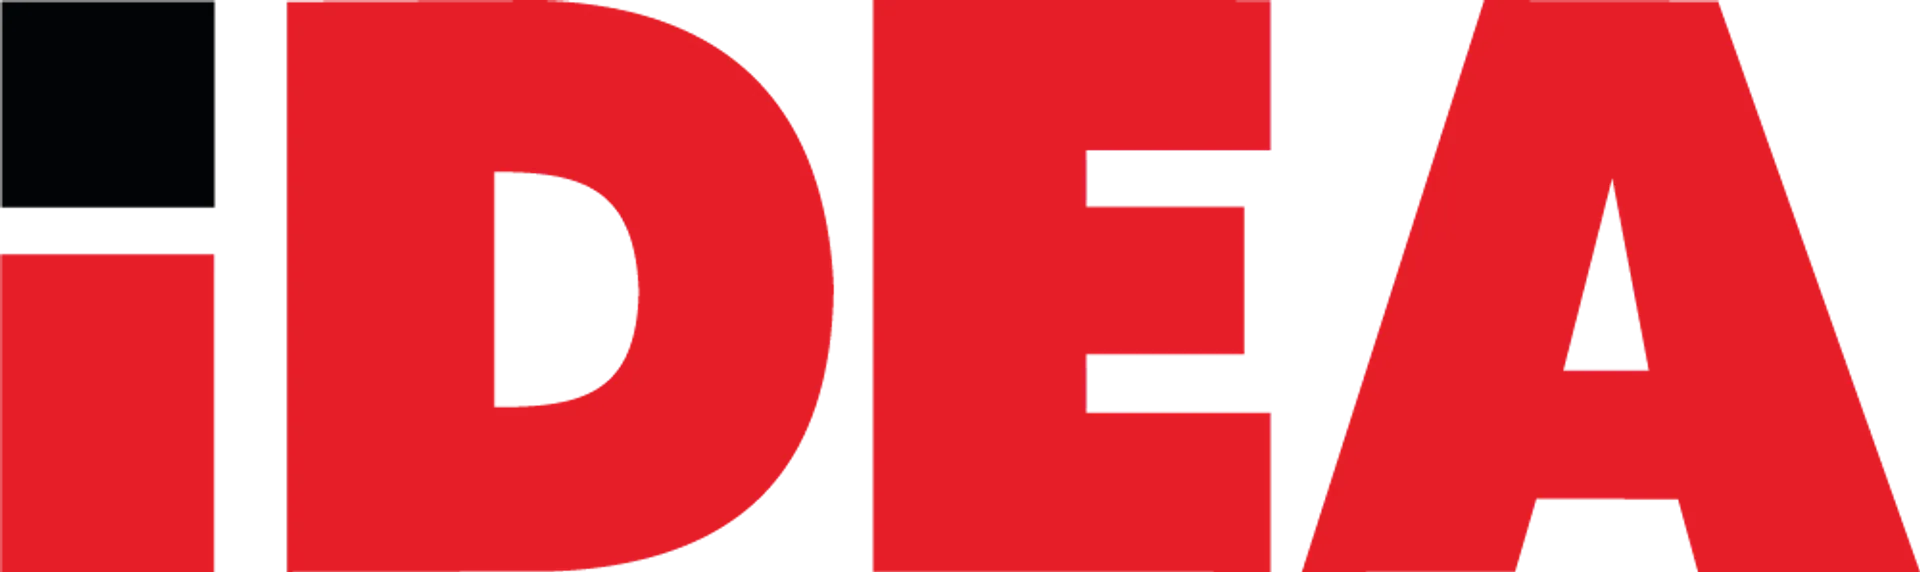 IDEA NÁBYTOK logo